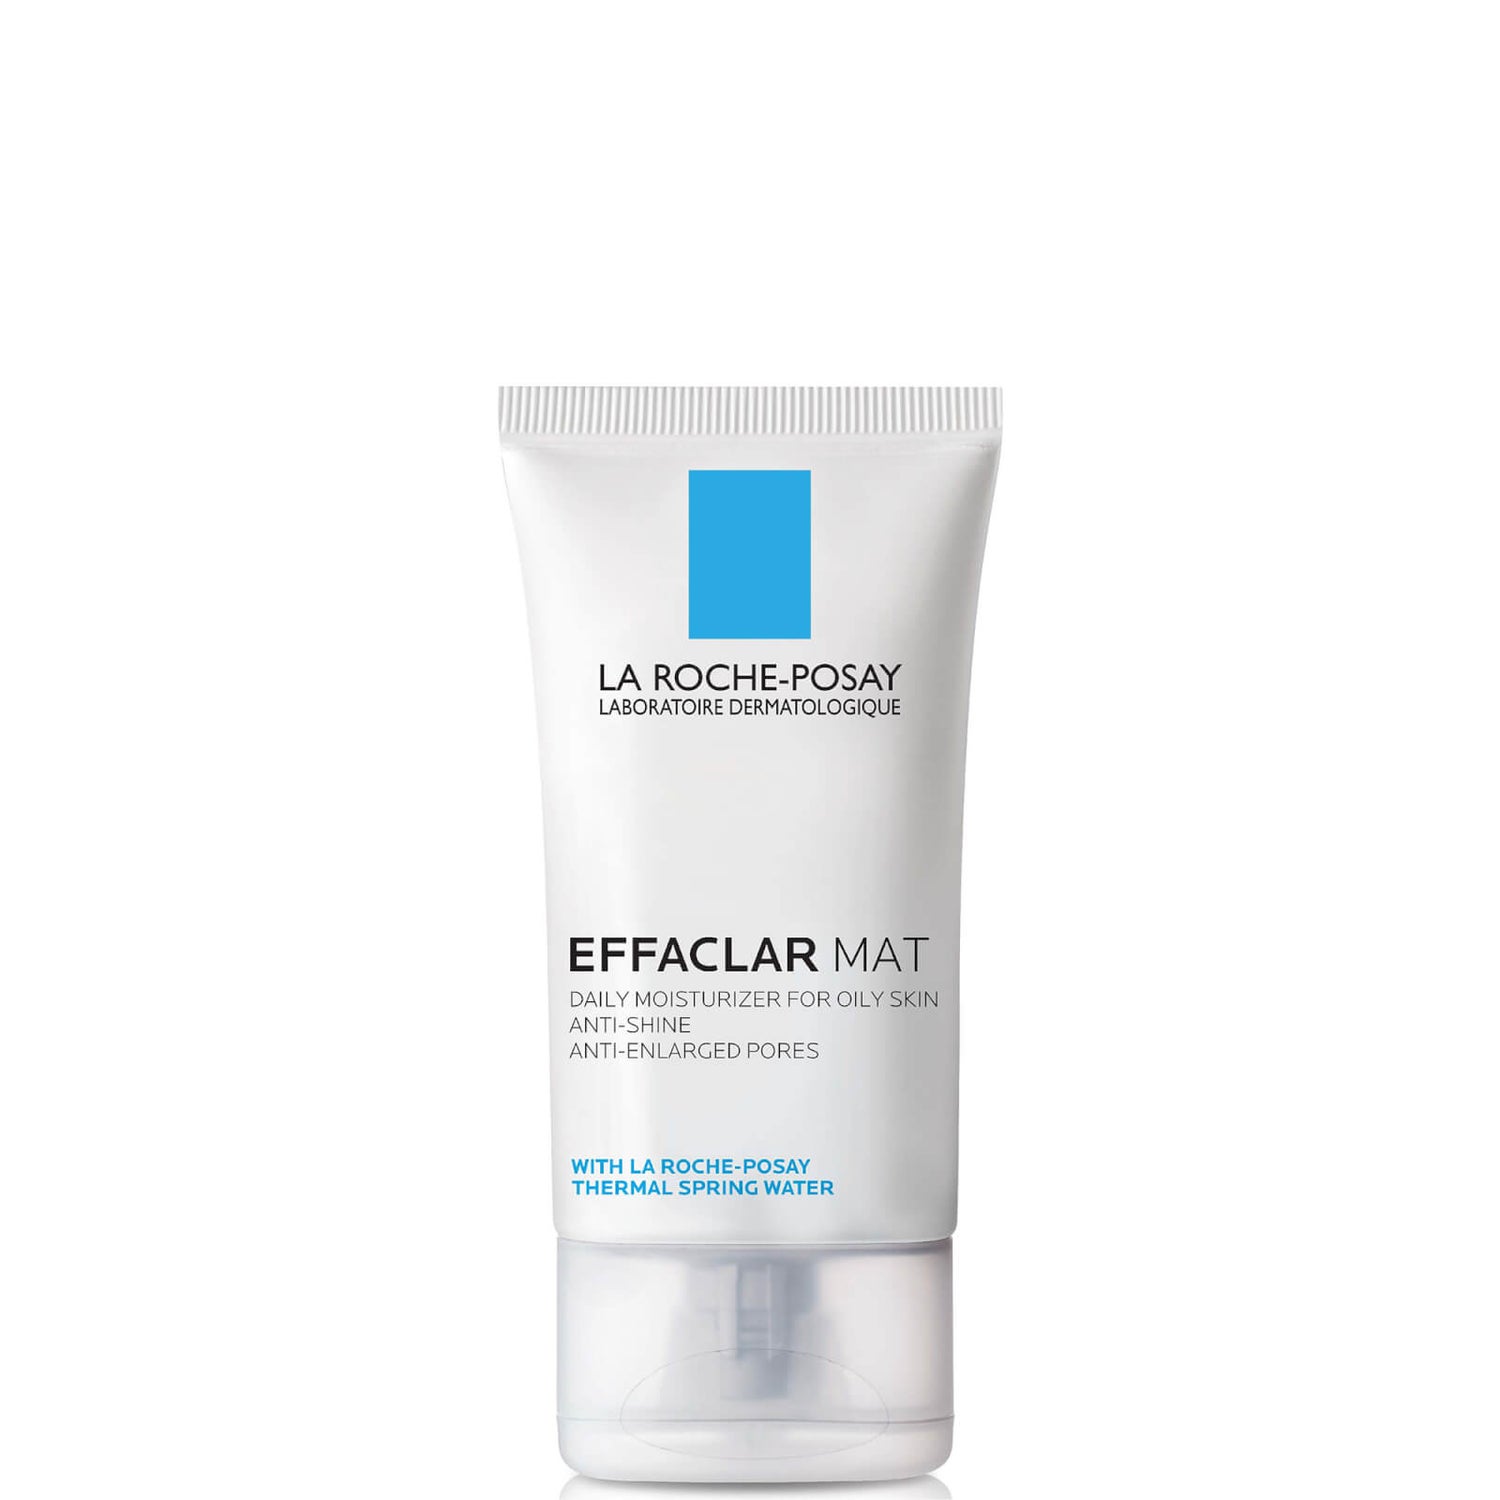 La Roche-Posay Effaclar Mat Daily Moisturizer for Oily Skin (1.35 fl. oz.)